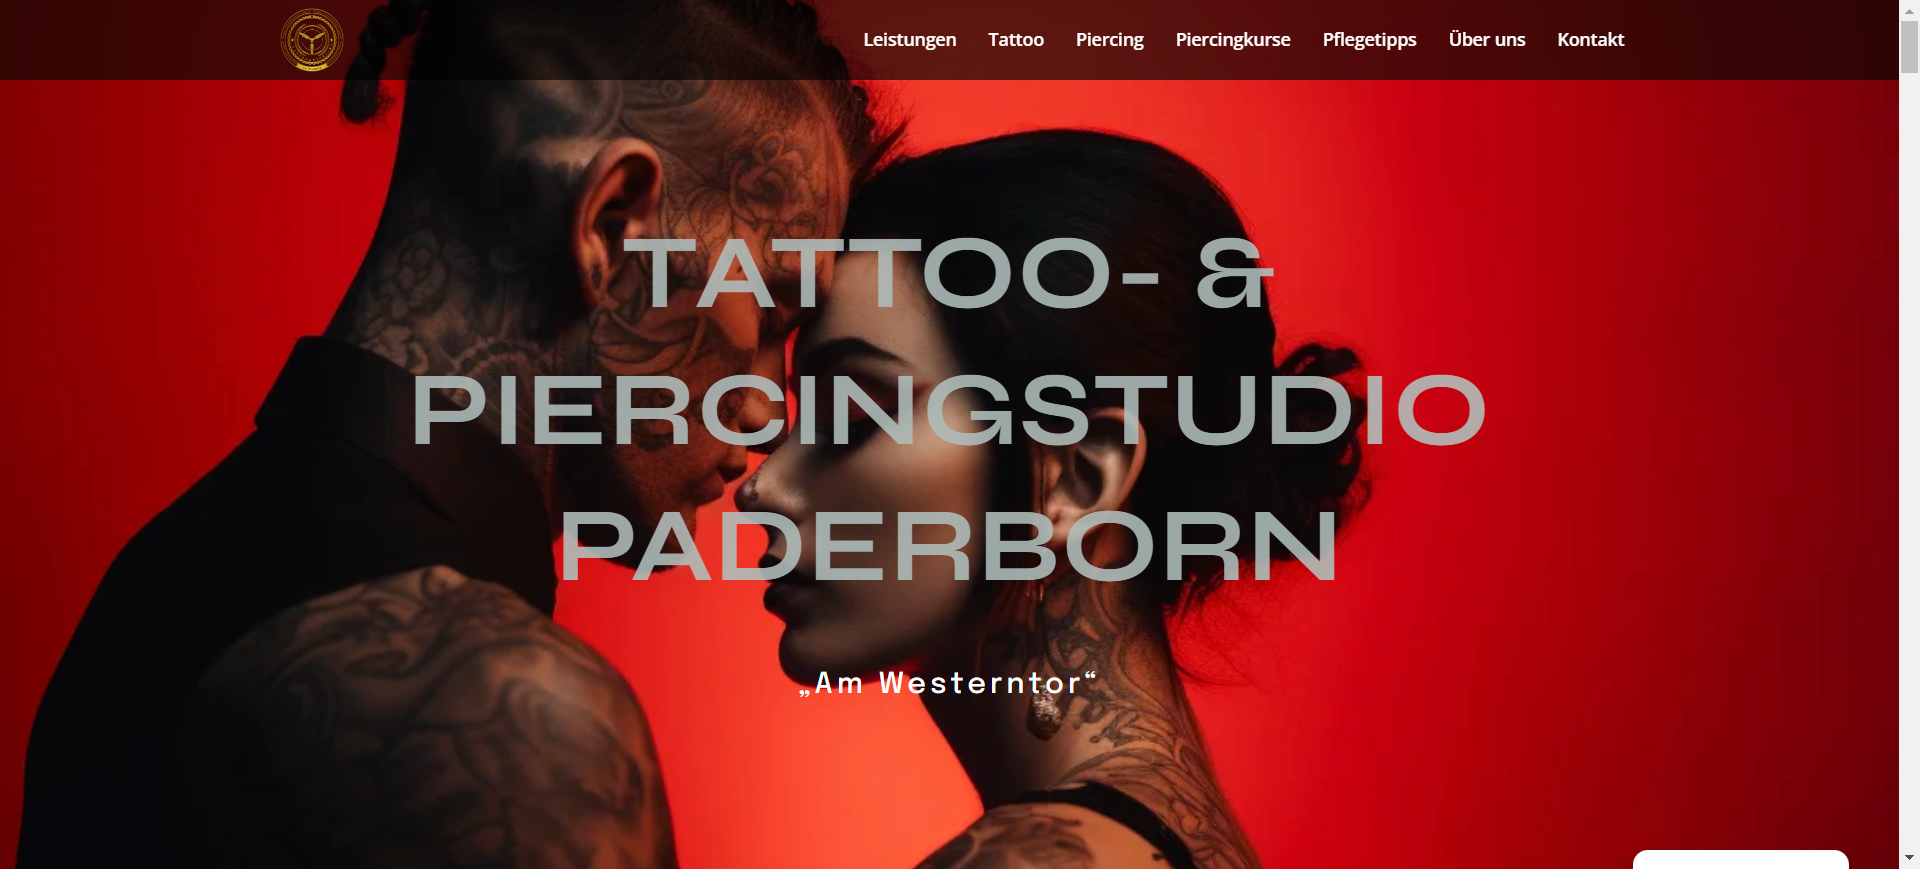 Tattoo Piercingstudio Paderborn „Am Westerntor